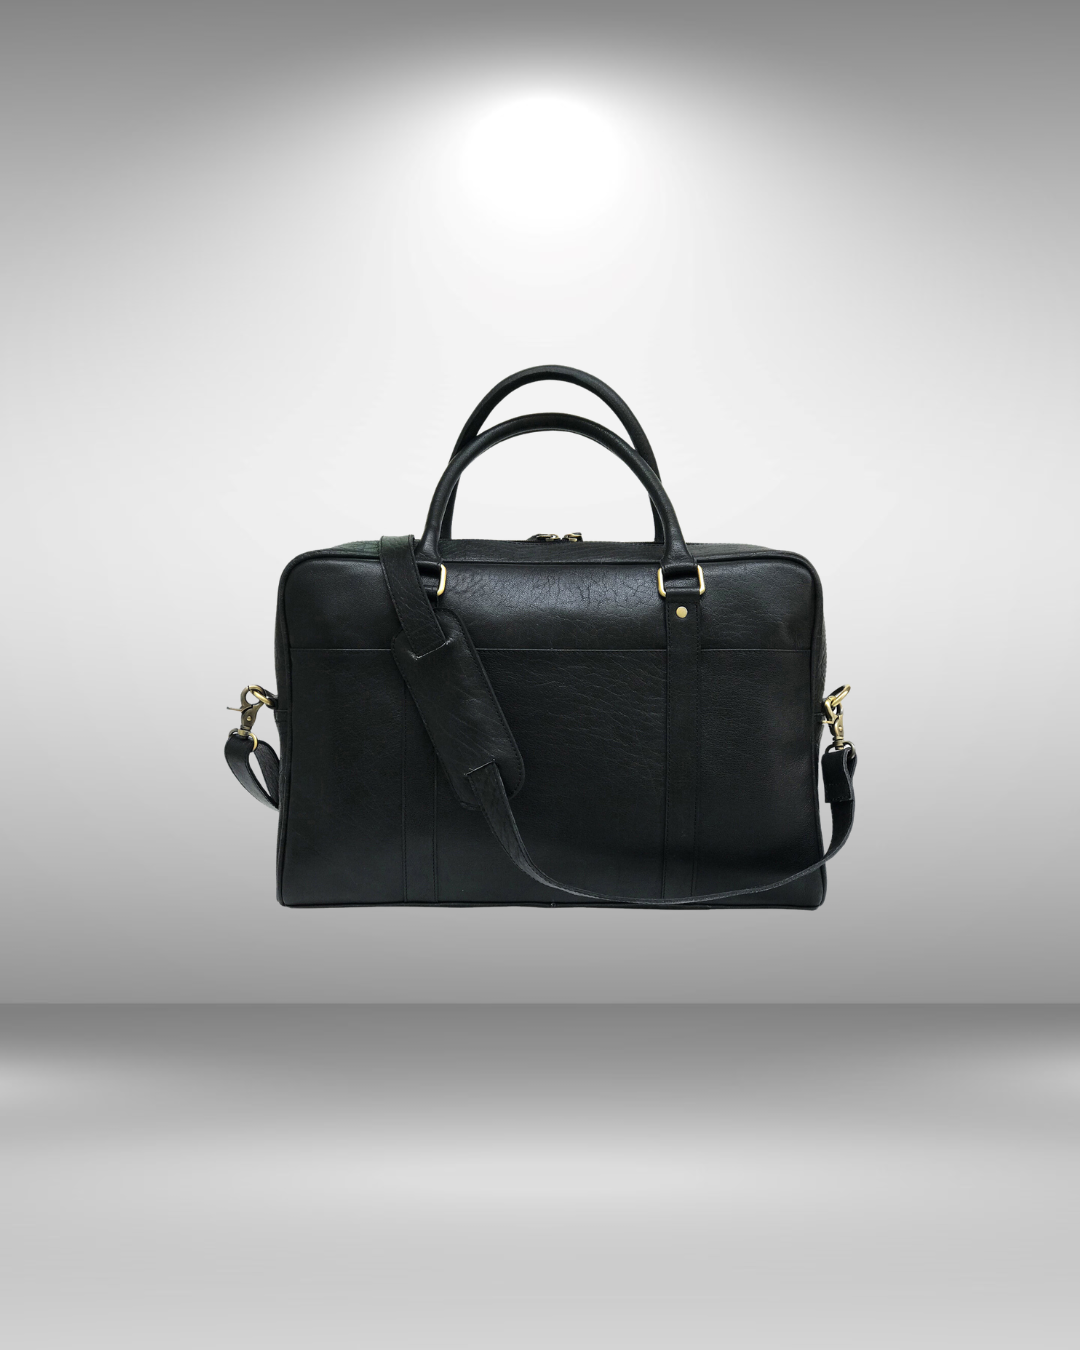 Black Leather Laptop Bag - Single Zipper Compartment-Status Co. Leather Studio